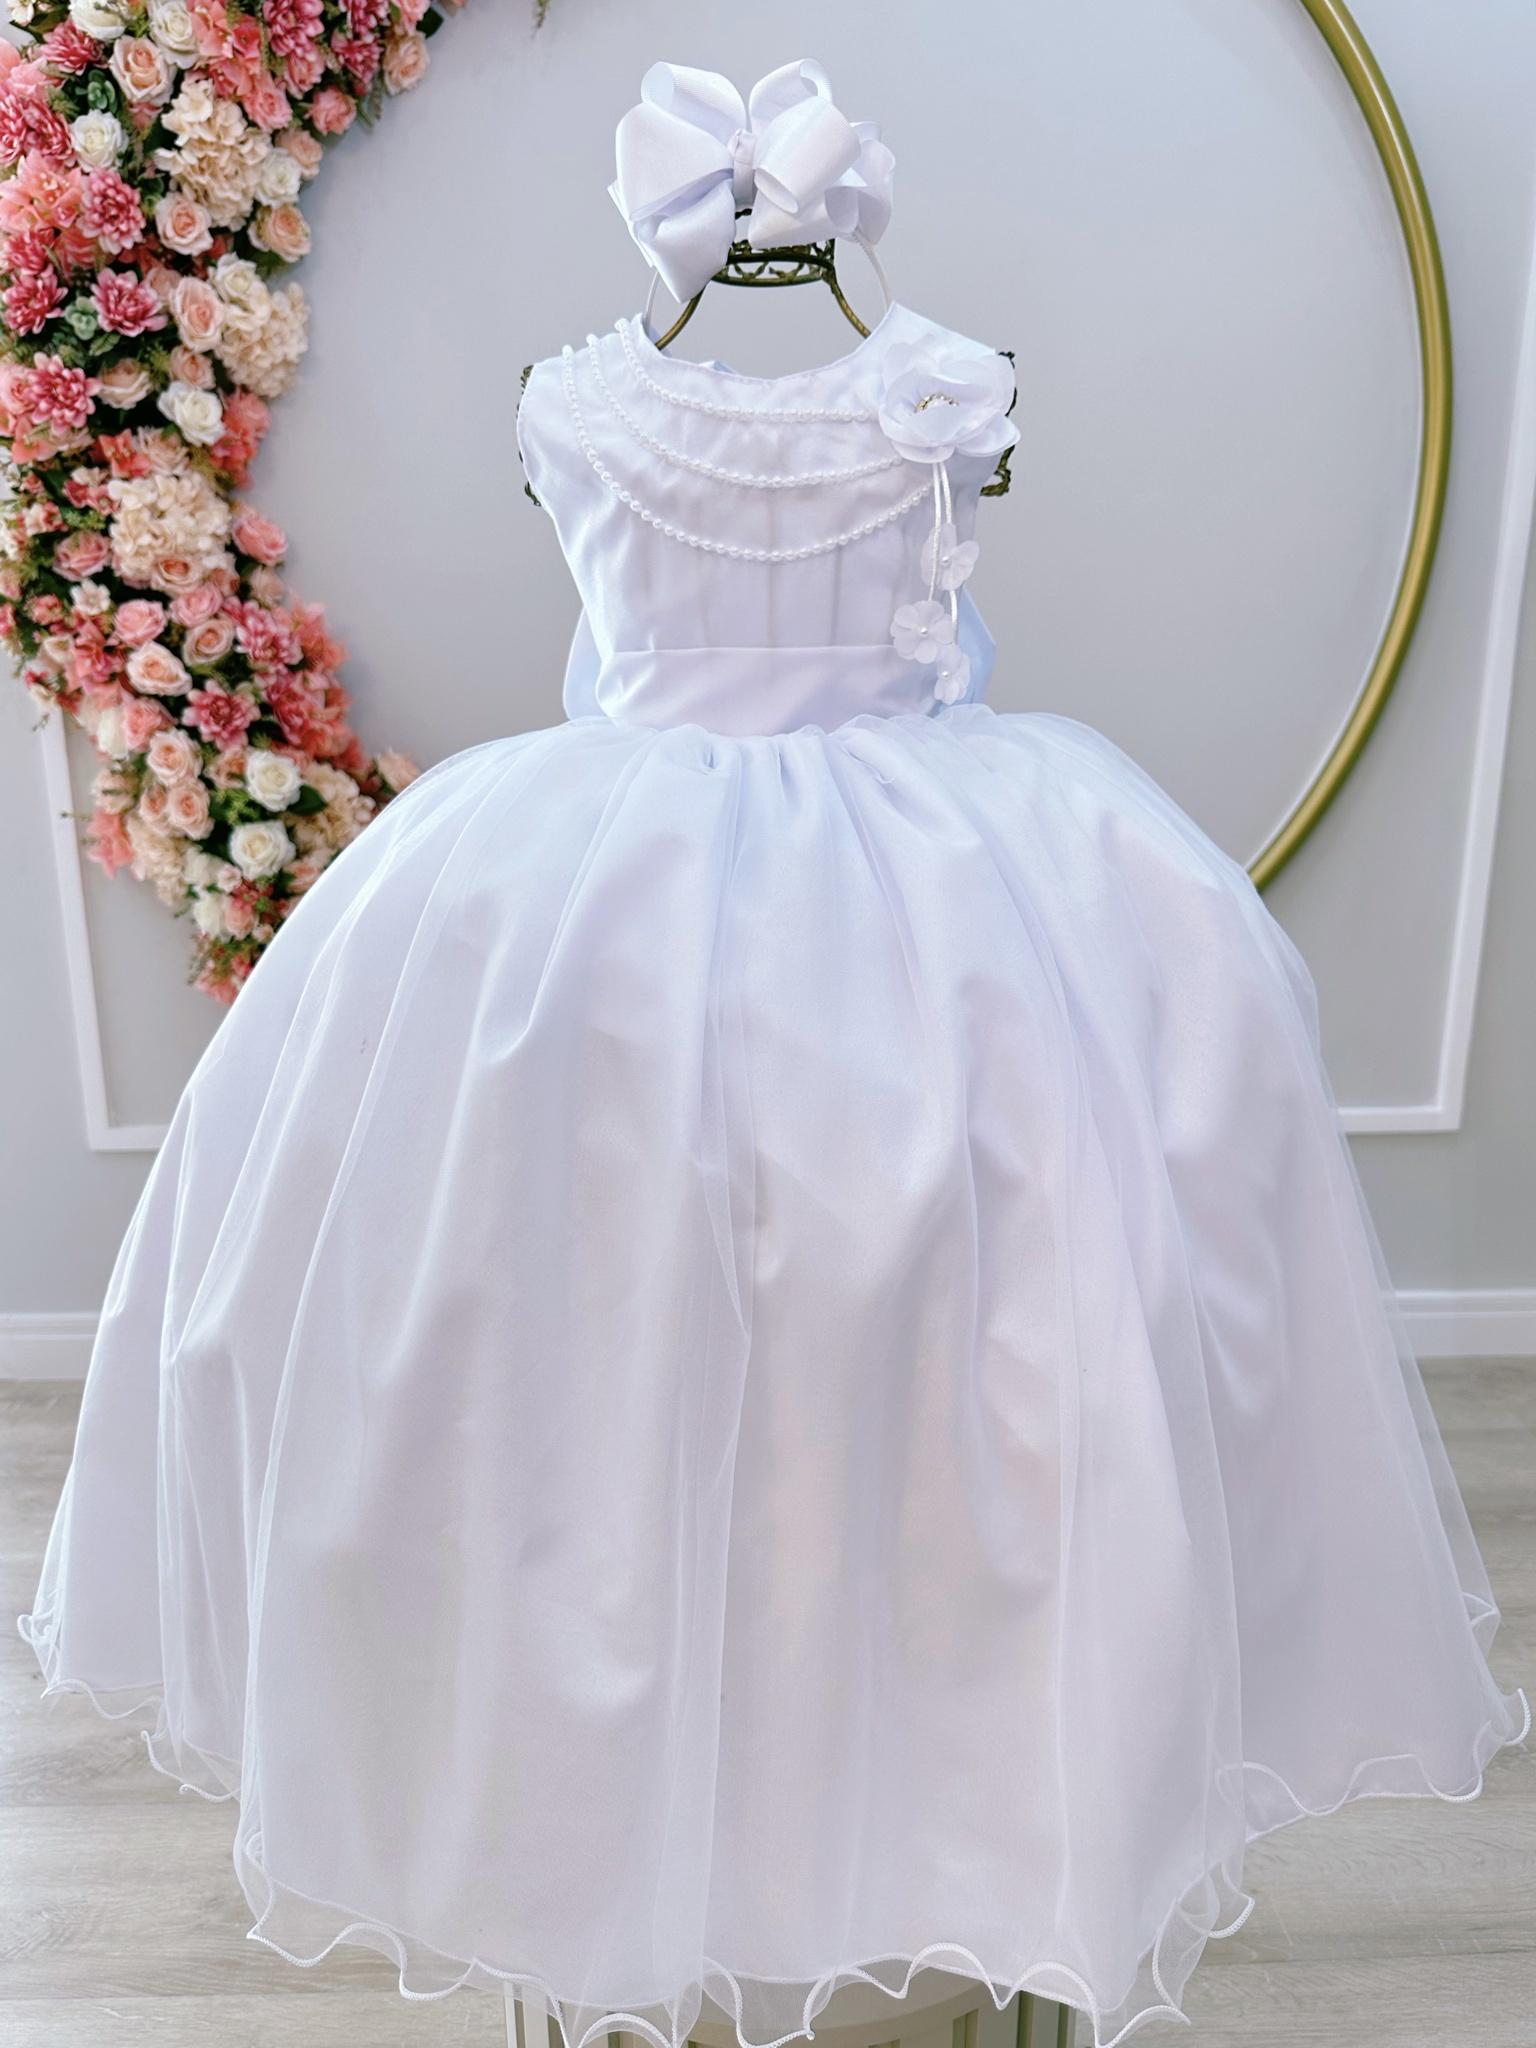 Vestido Infantil Branco Damas de Honra Casamentos C/ Broche